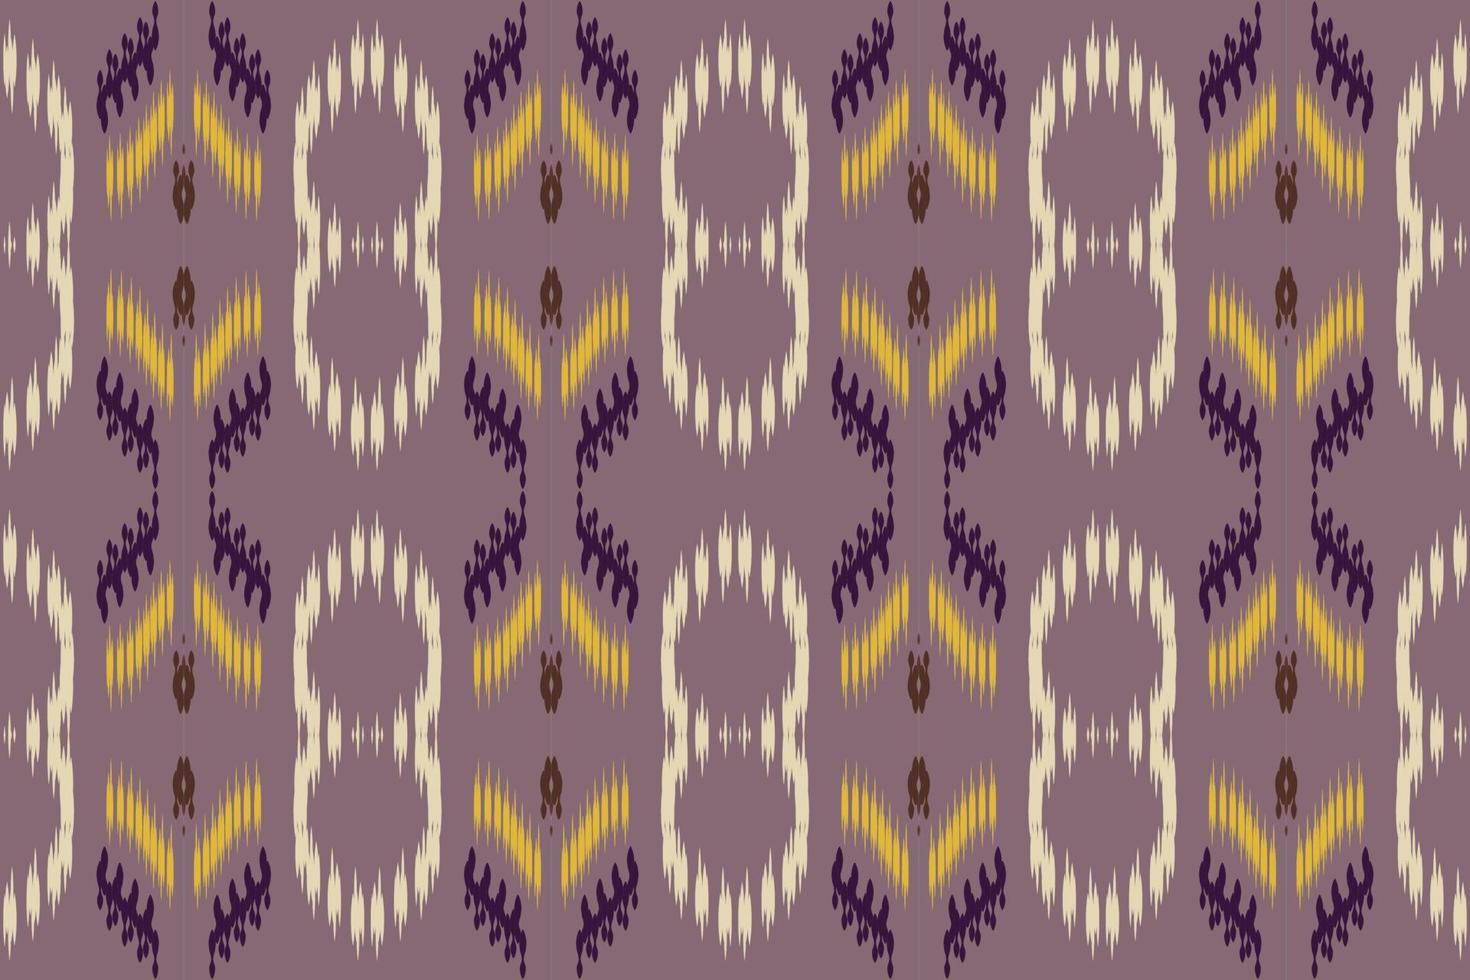 ikkat o ikat disegni tribale colore Borneo scandinavo batik boemo struttura digitale vettore design per Stampa saree Kurti tessuto spazzola simboli campioni